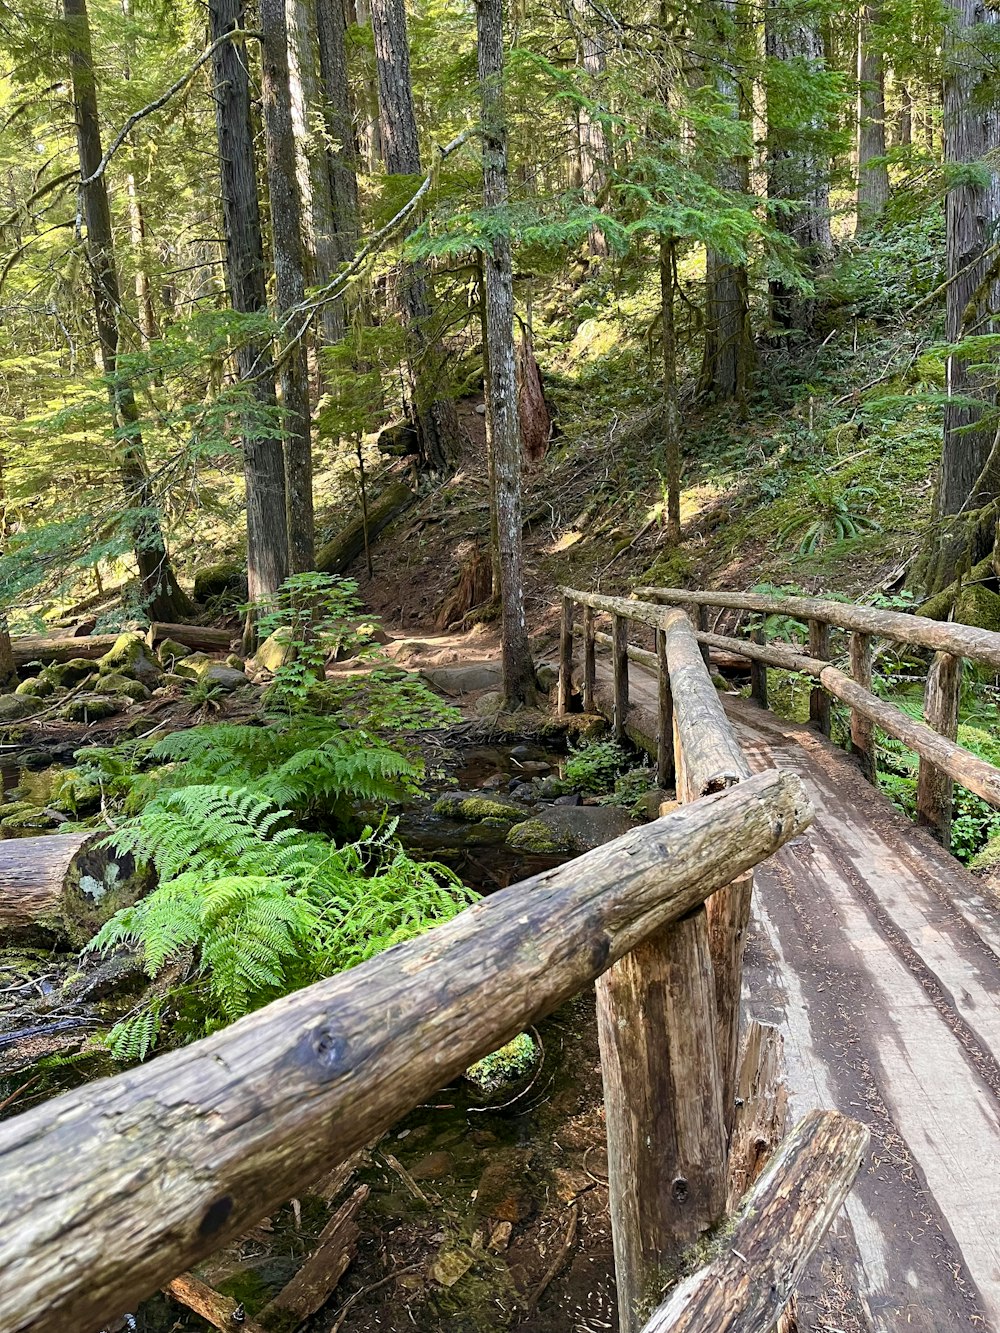 a wooden bridge in the woods